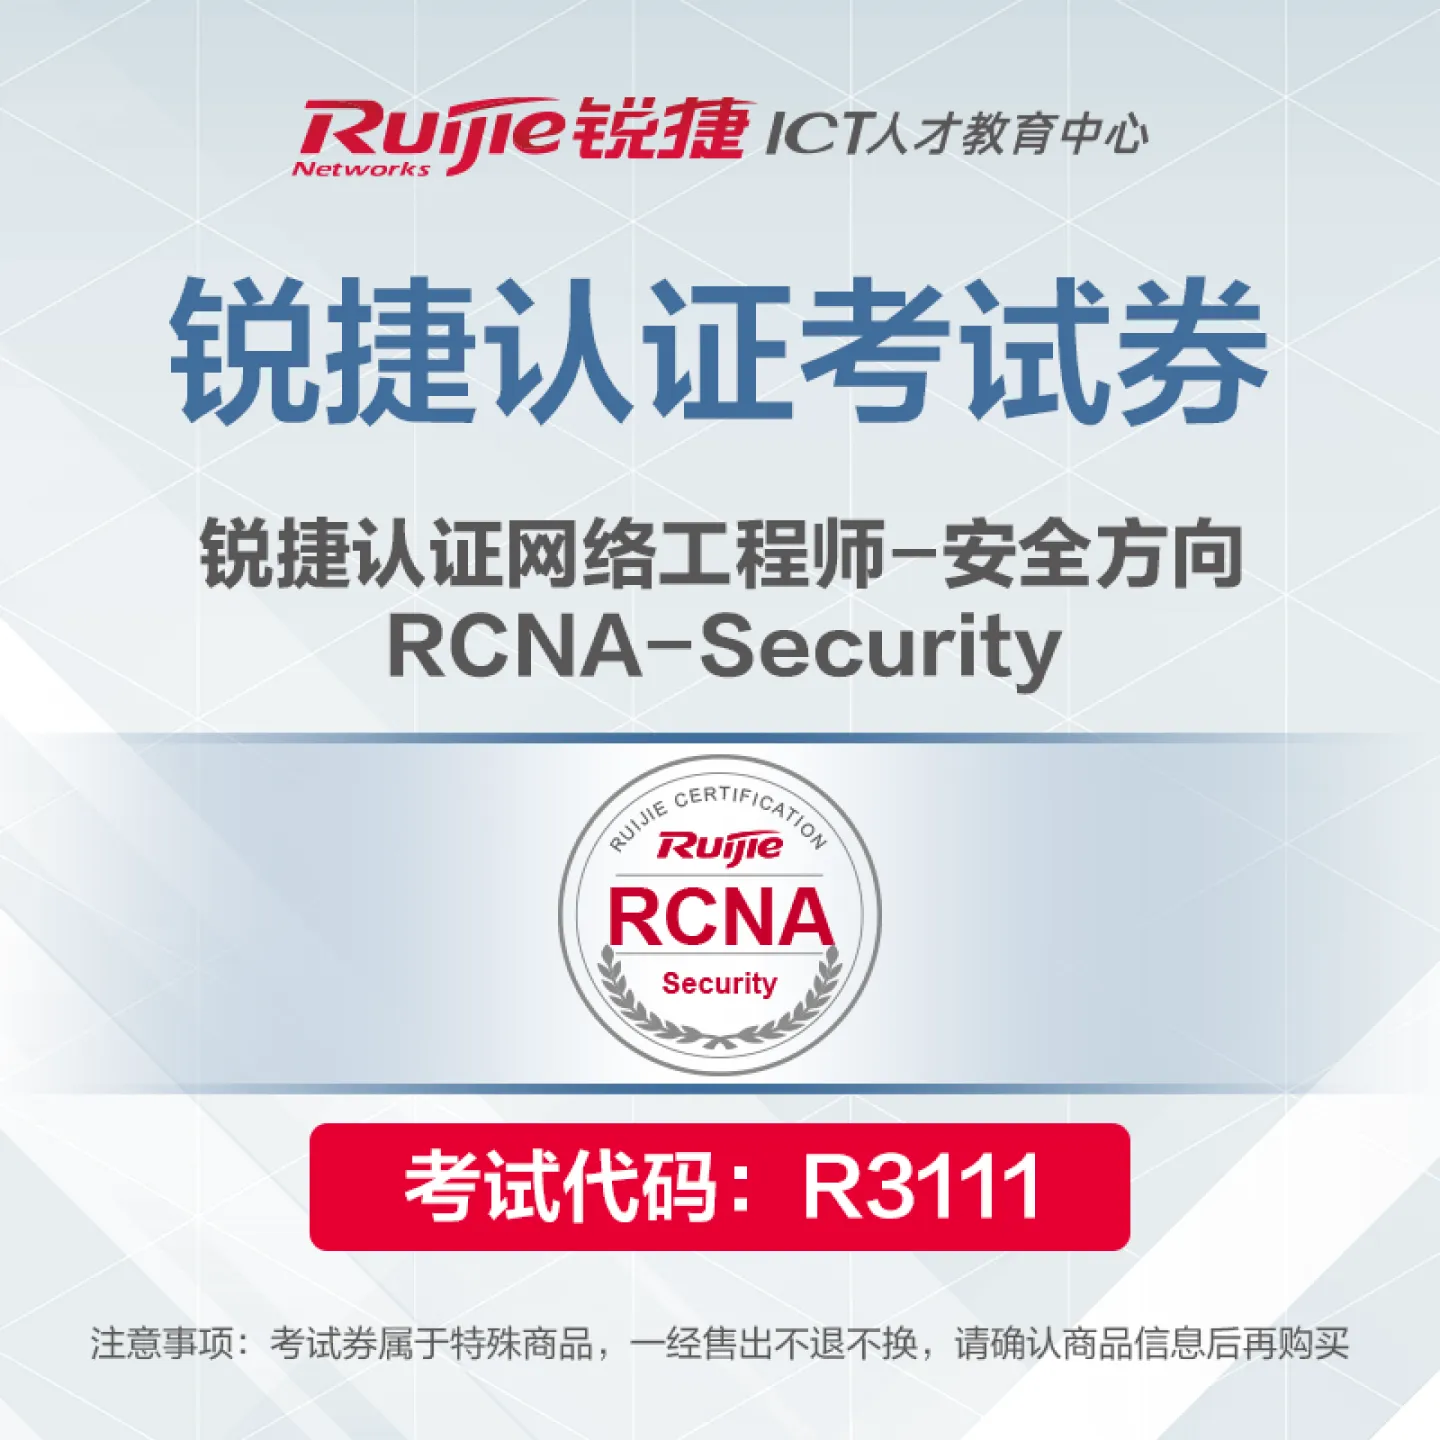 ����璇��搞��RCNA-Security